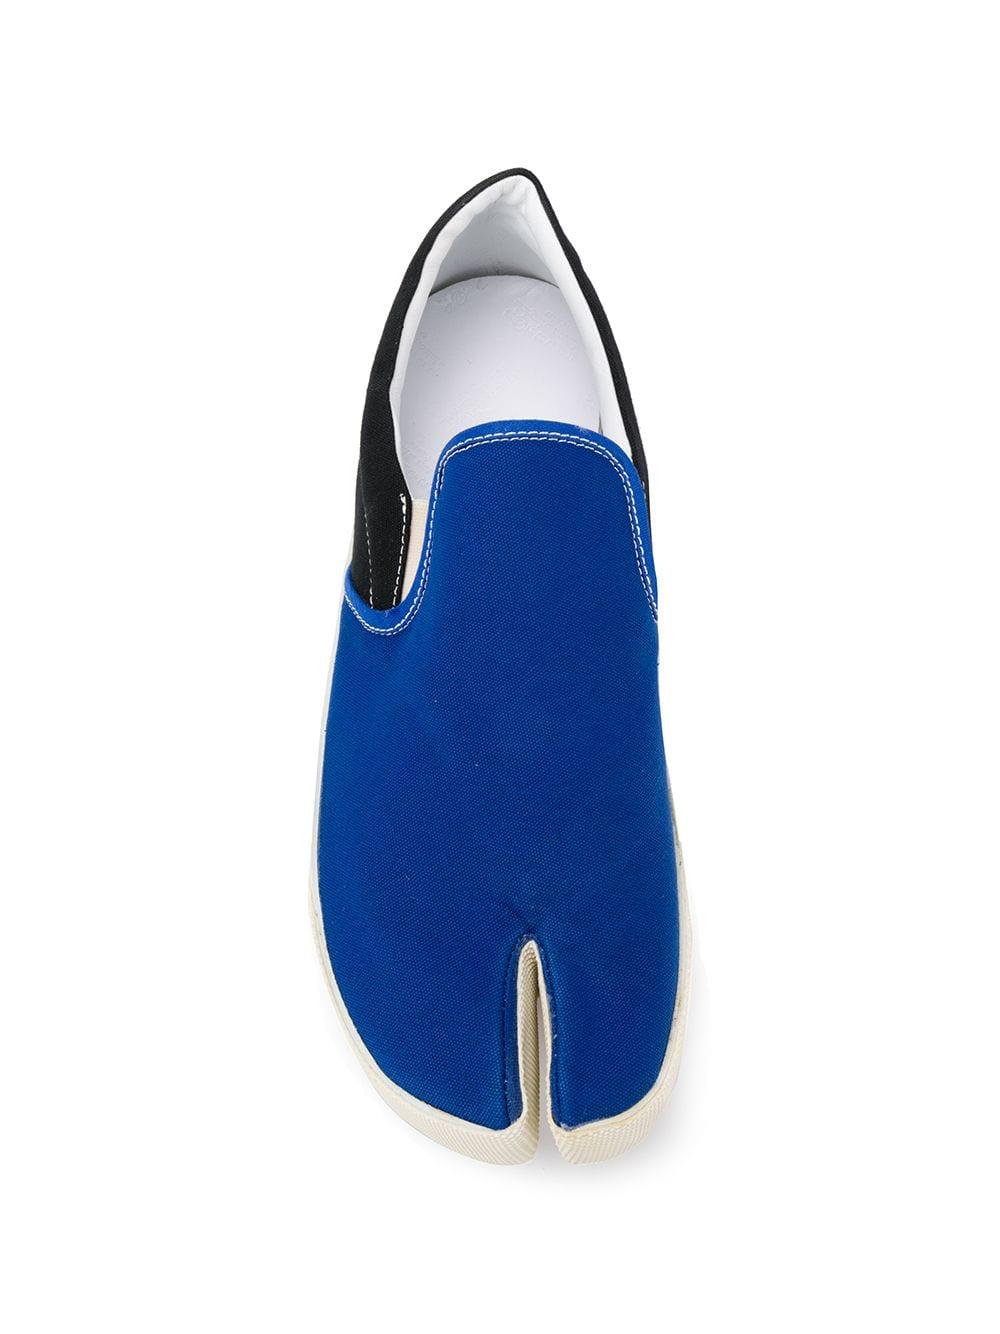 Maison Margiela Tabi Slip-on Sneakers in Blue for Men - Lyst